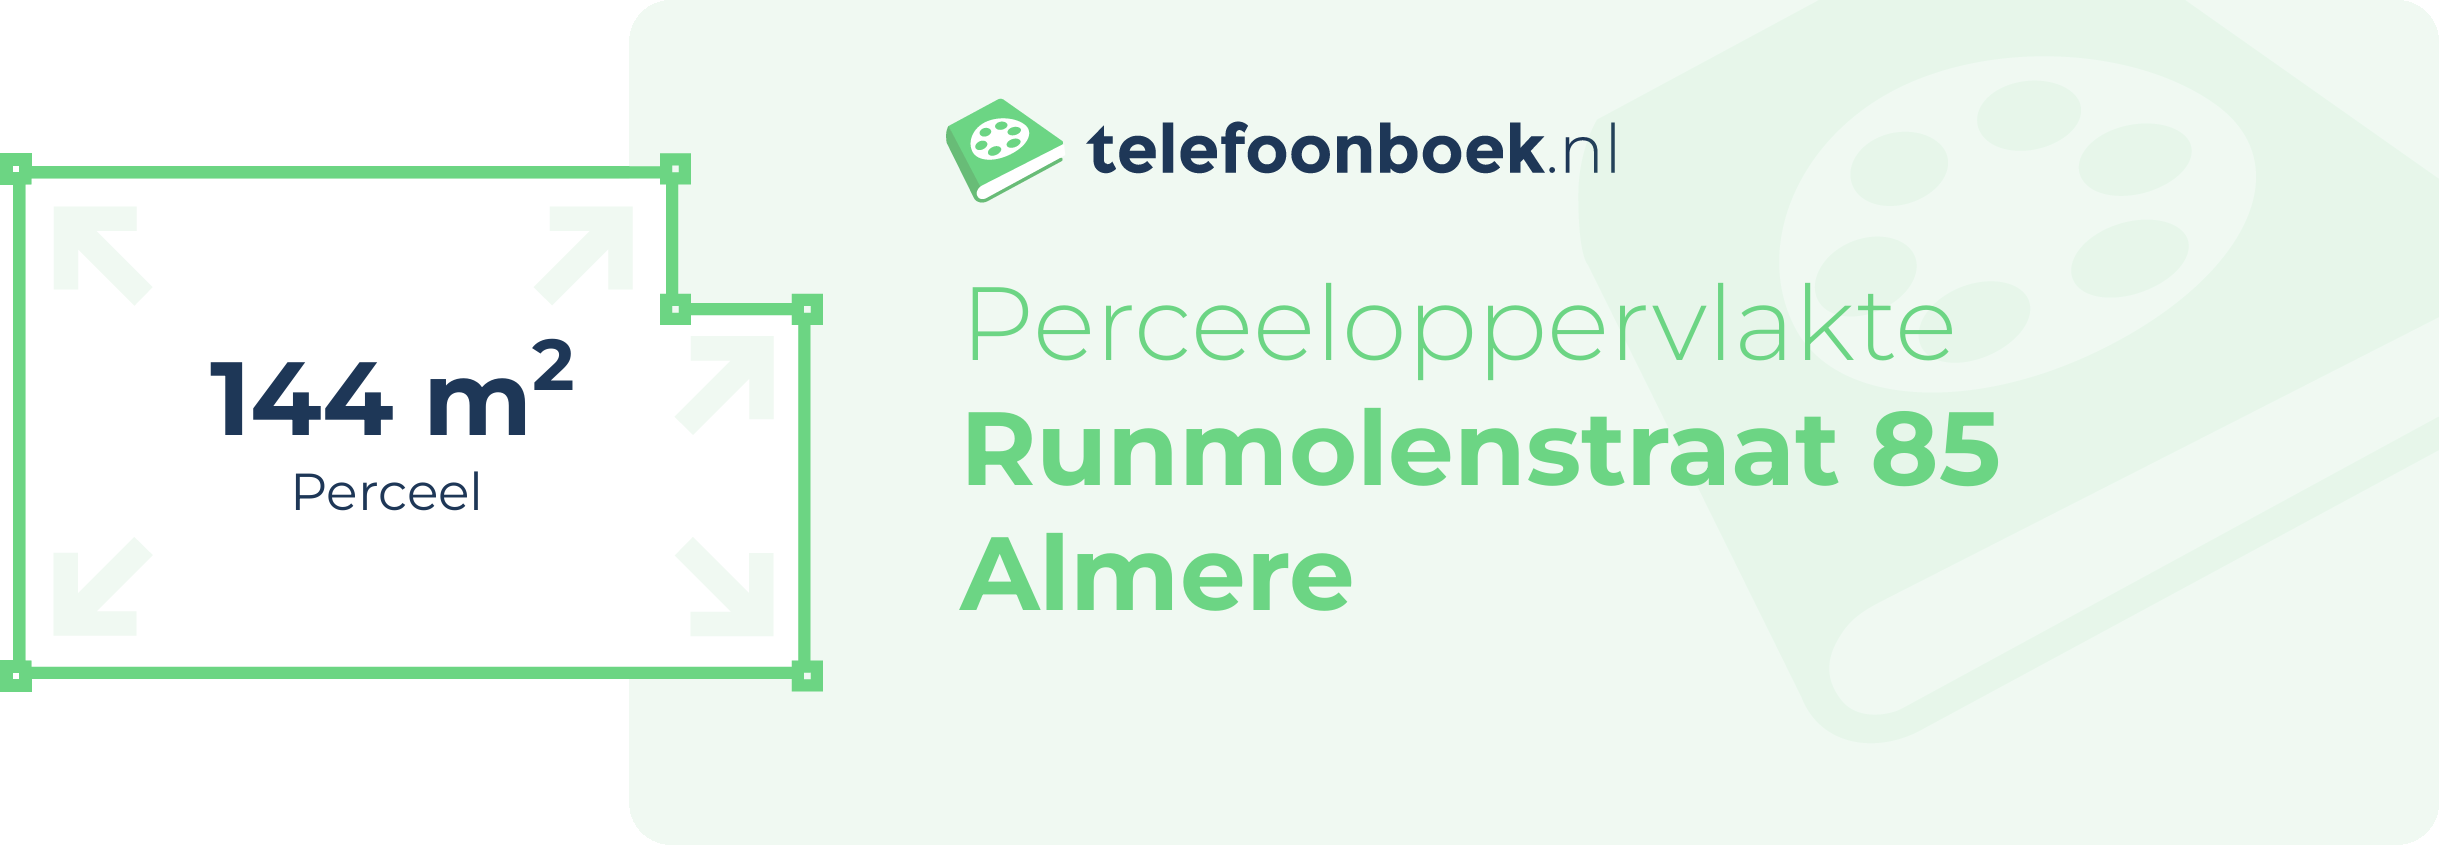 Perceeloppervlakte Runmolenstraat 85 Almere